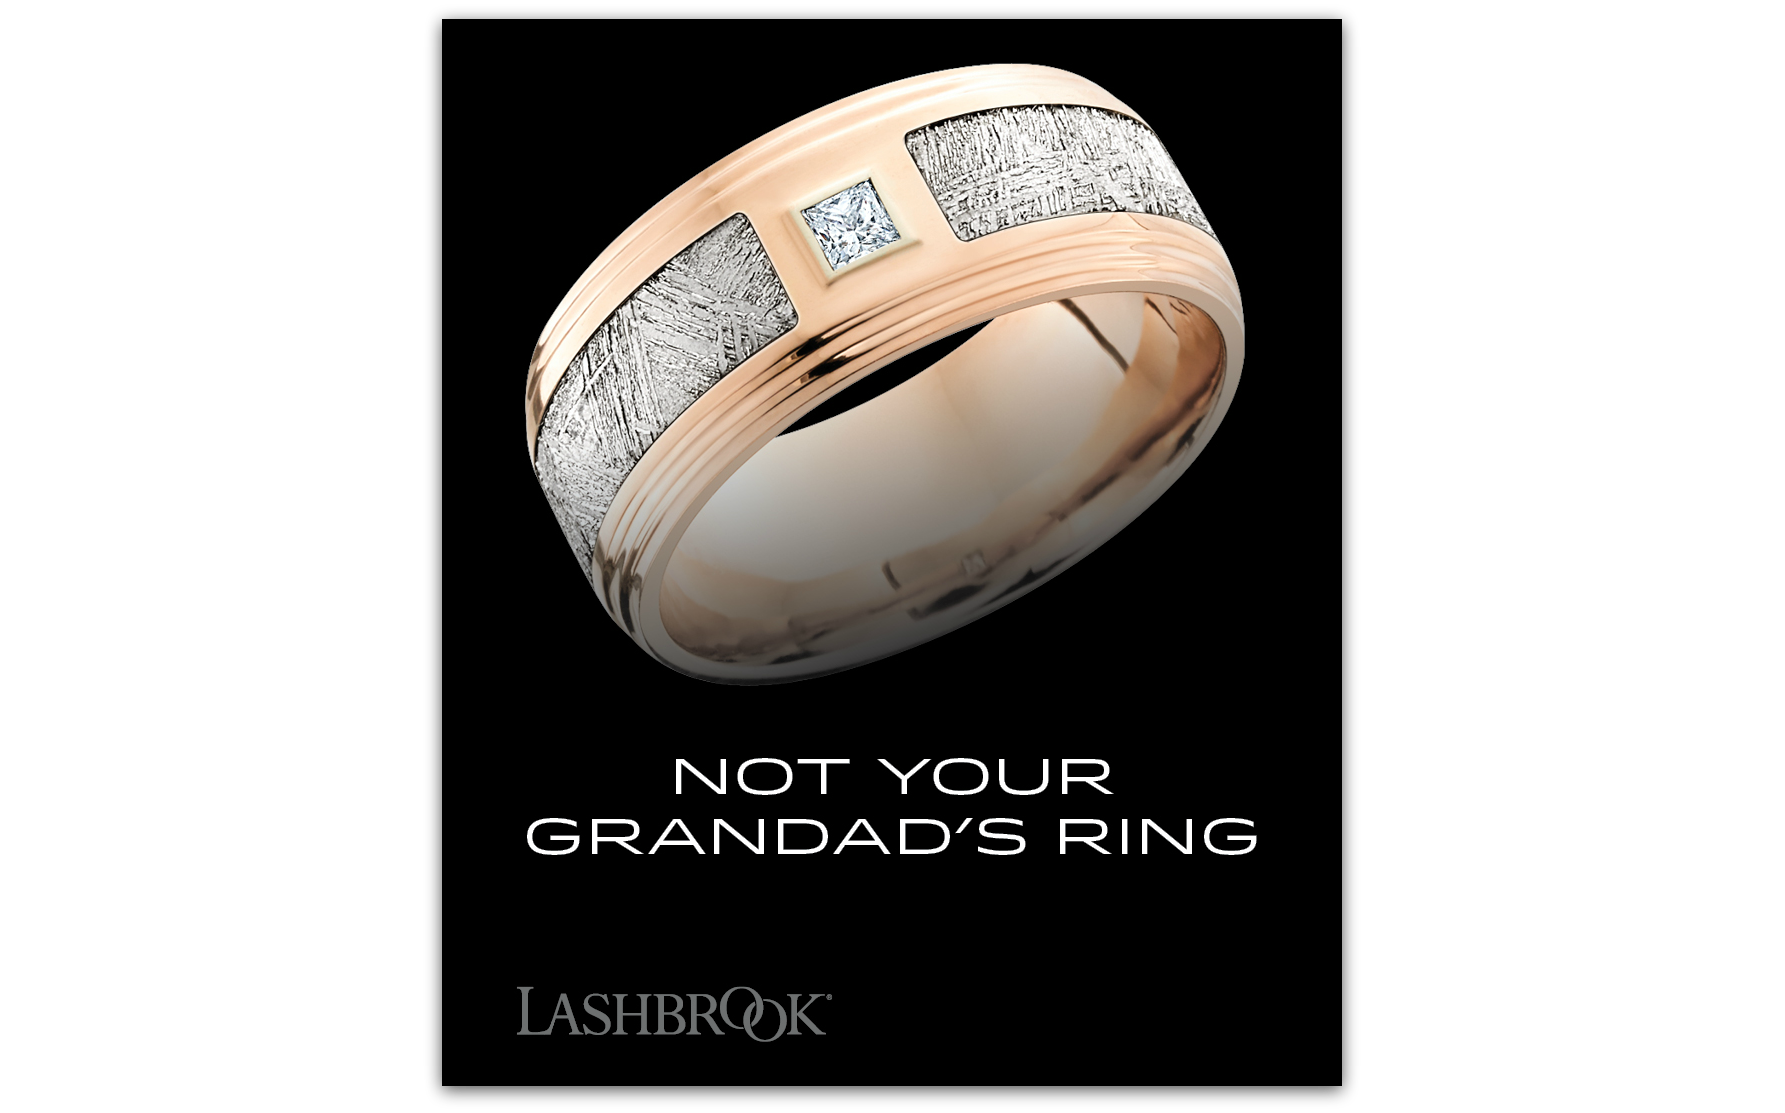 Lashbrook rings